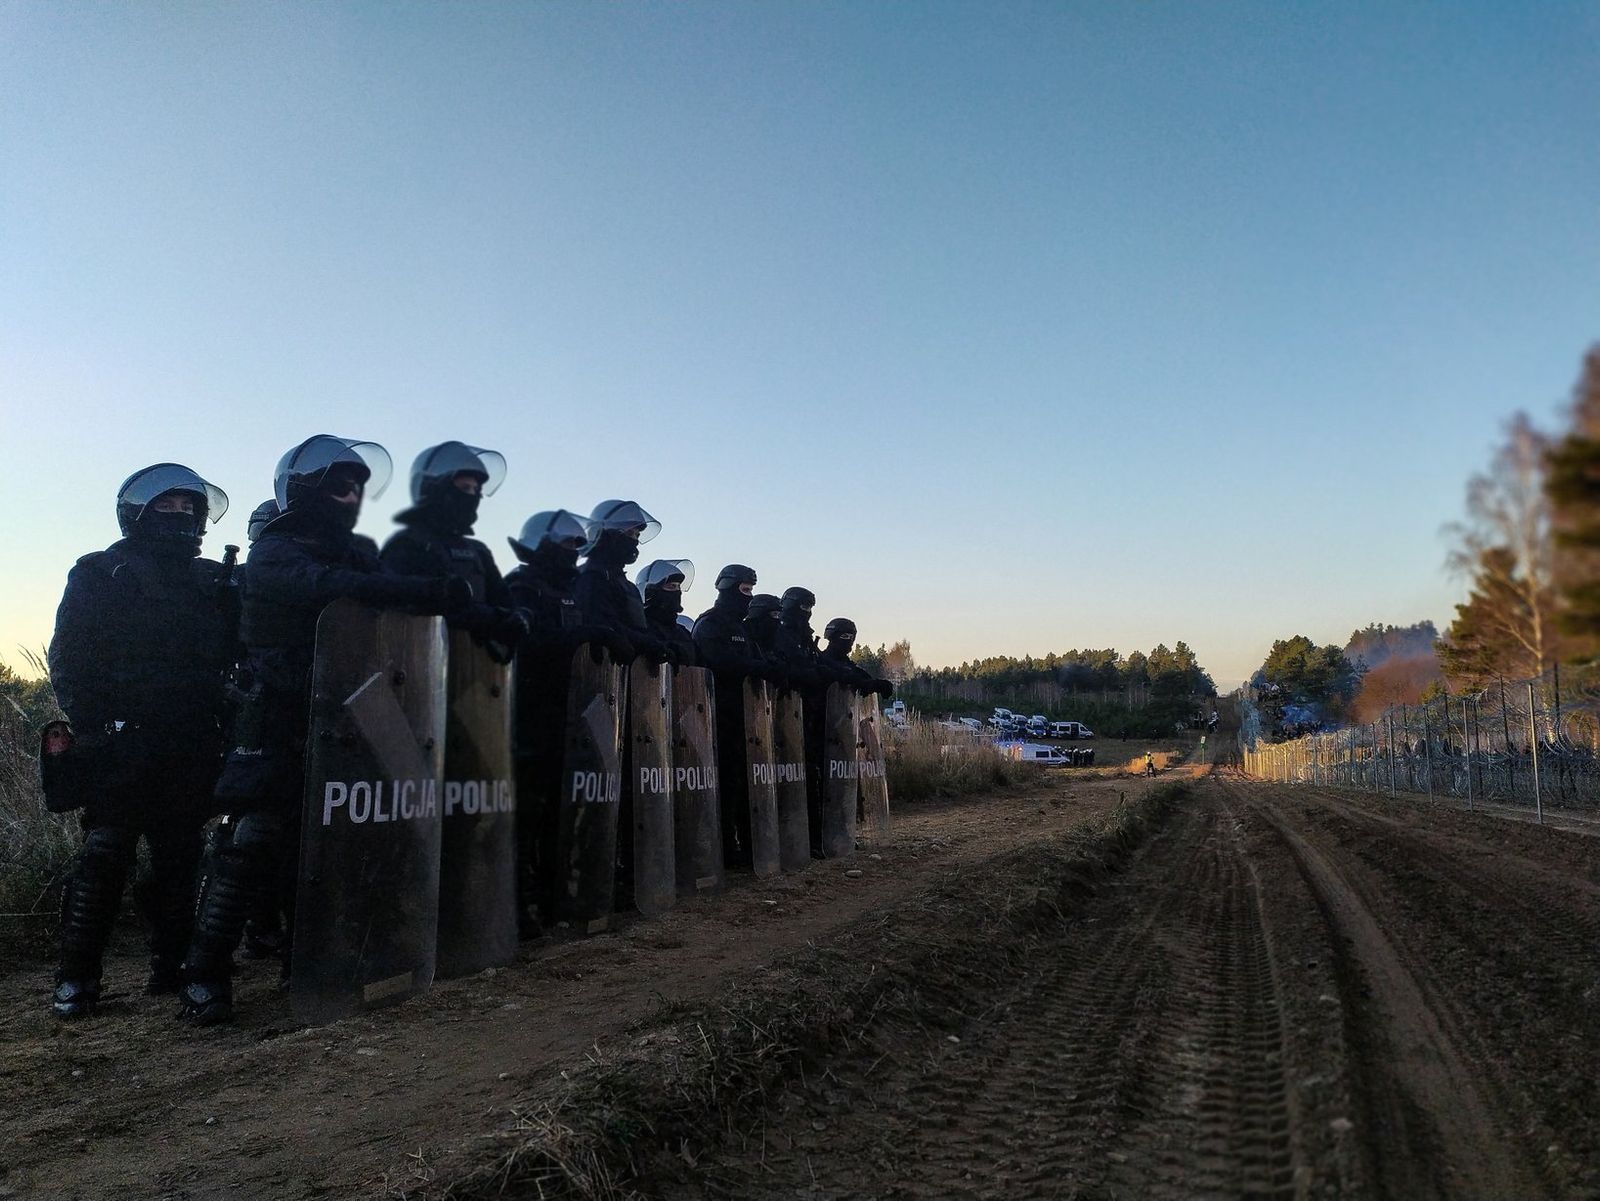 Polish police guard border fence on the Poland/Belarus border near Kuznica - via REUTERS